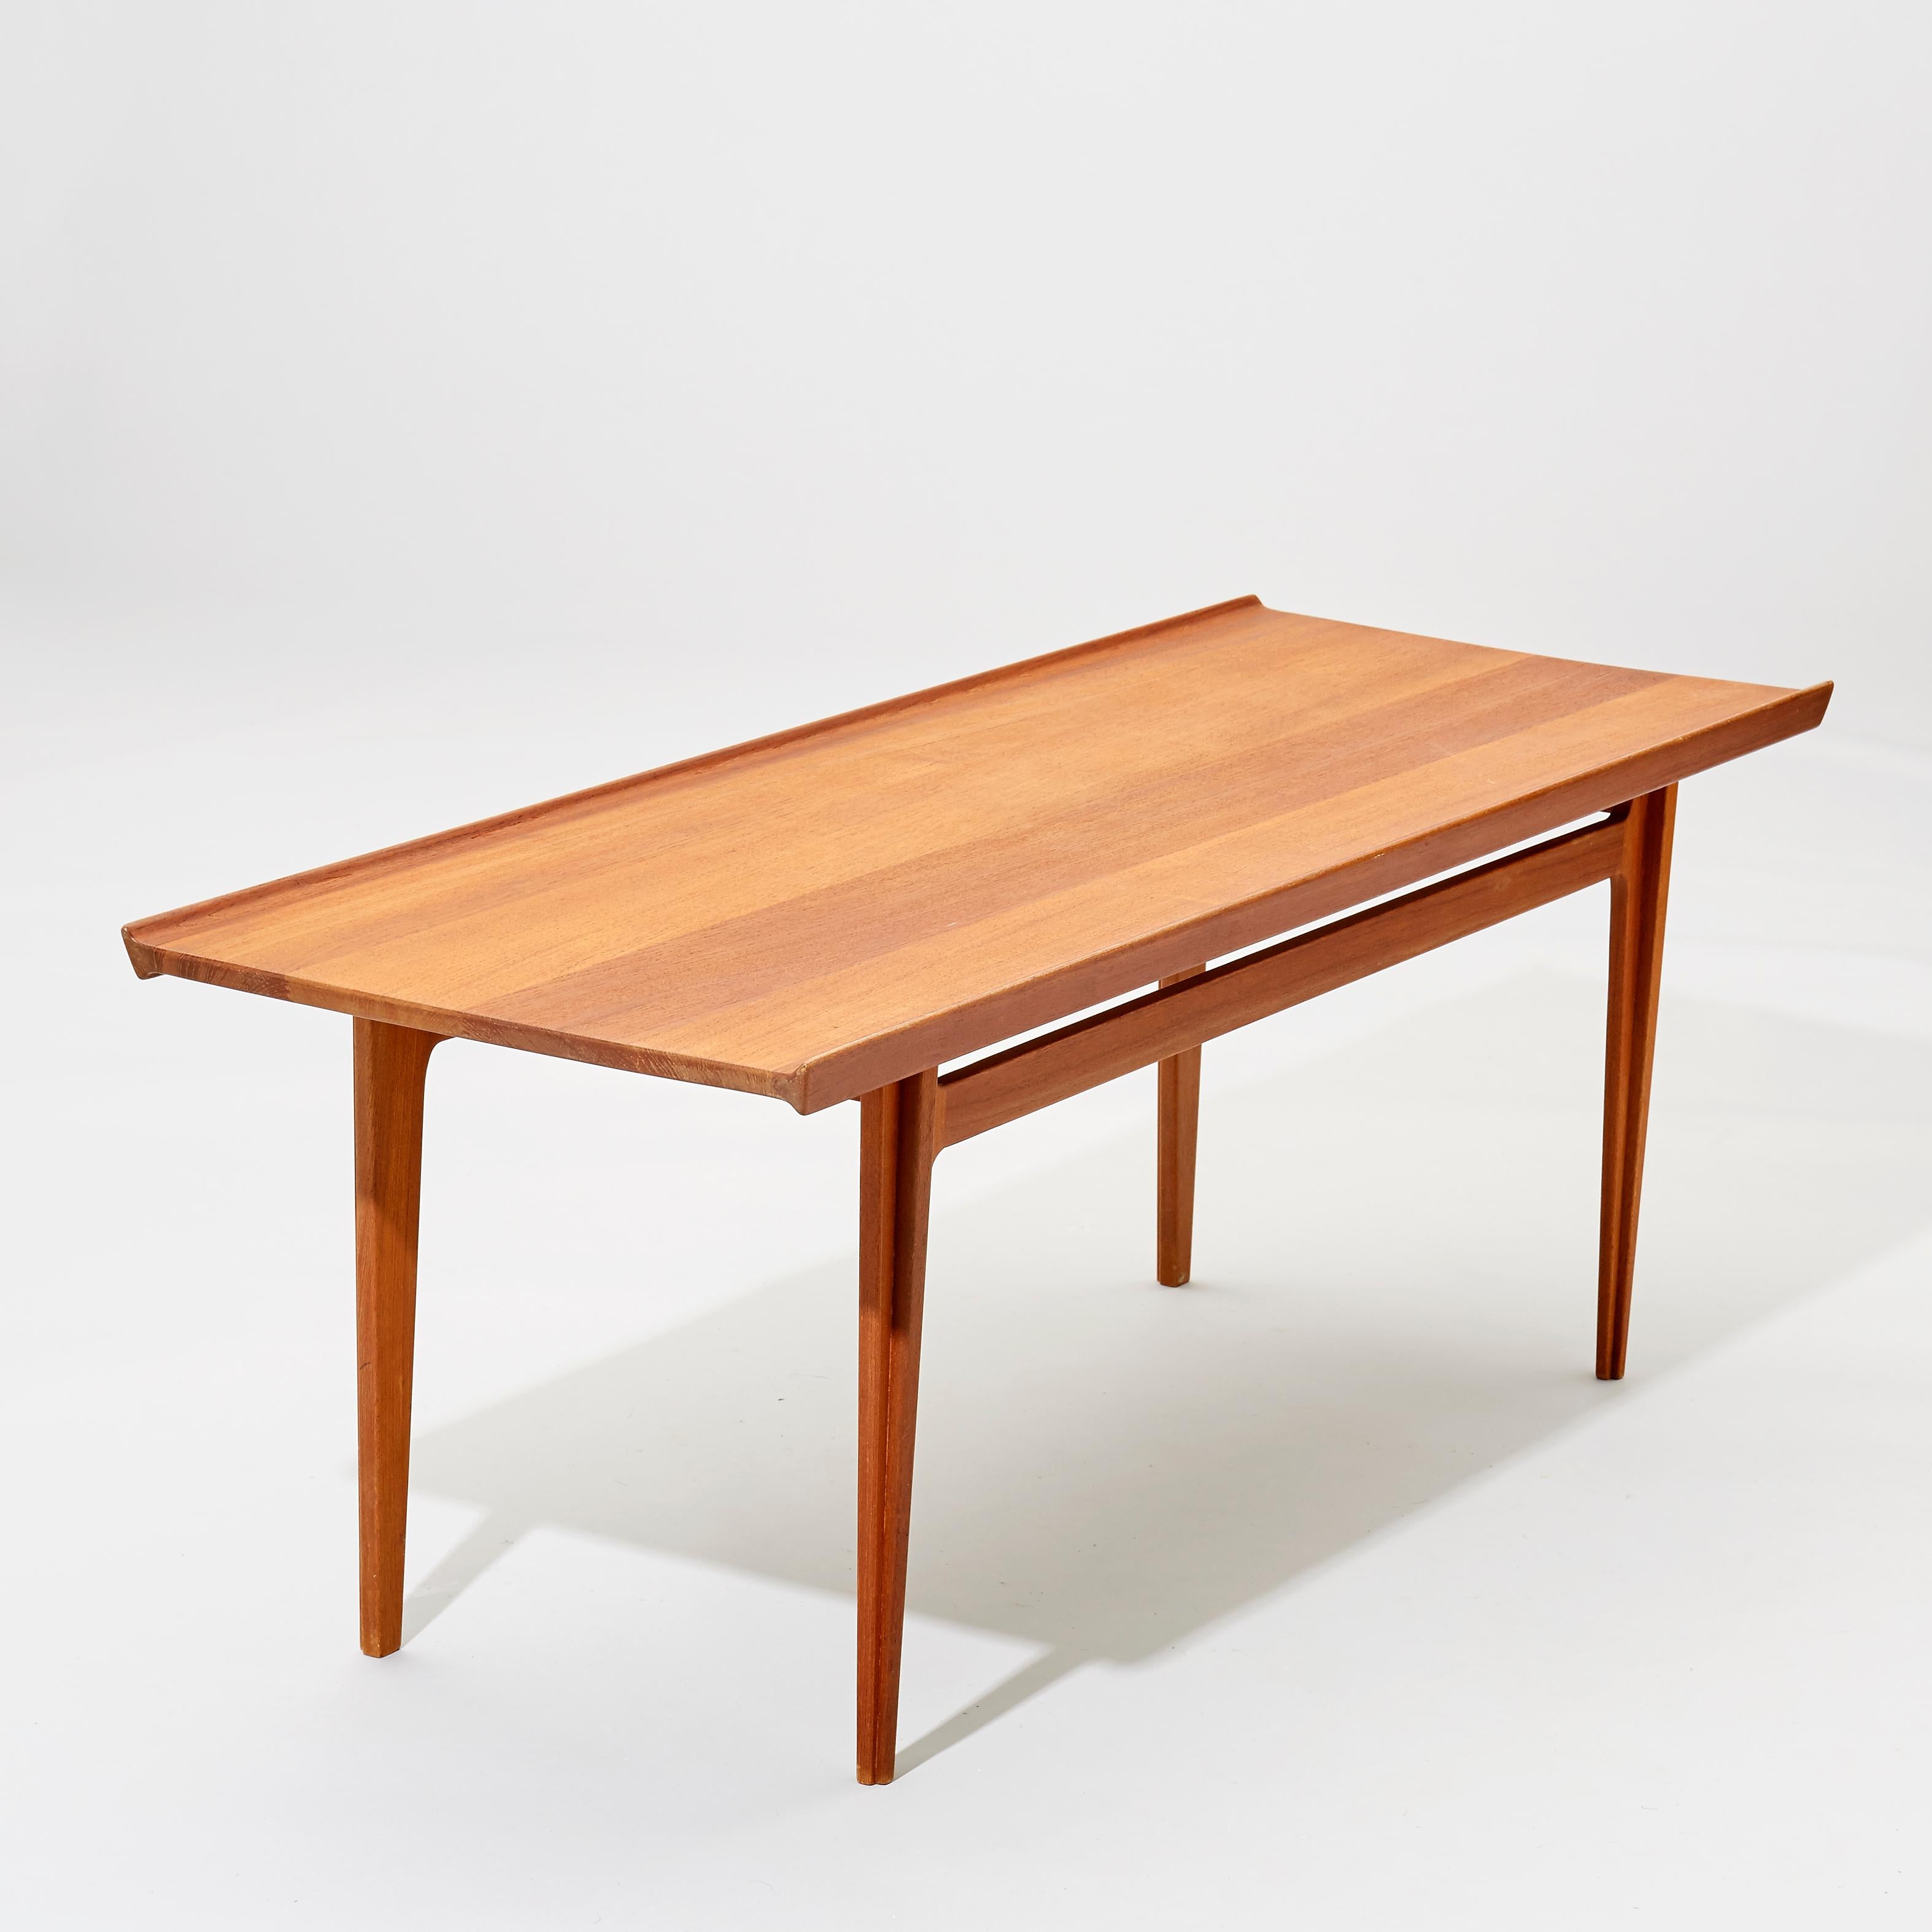 Mid-Century Modern Solid Teak Coffee Table, Model 532, by Finn Juhl for France & Son